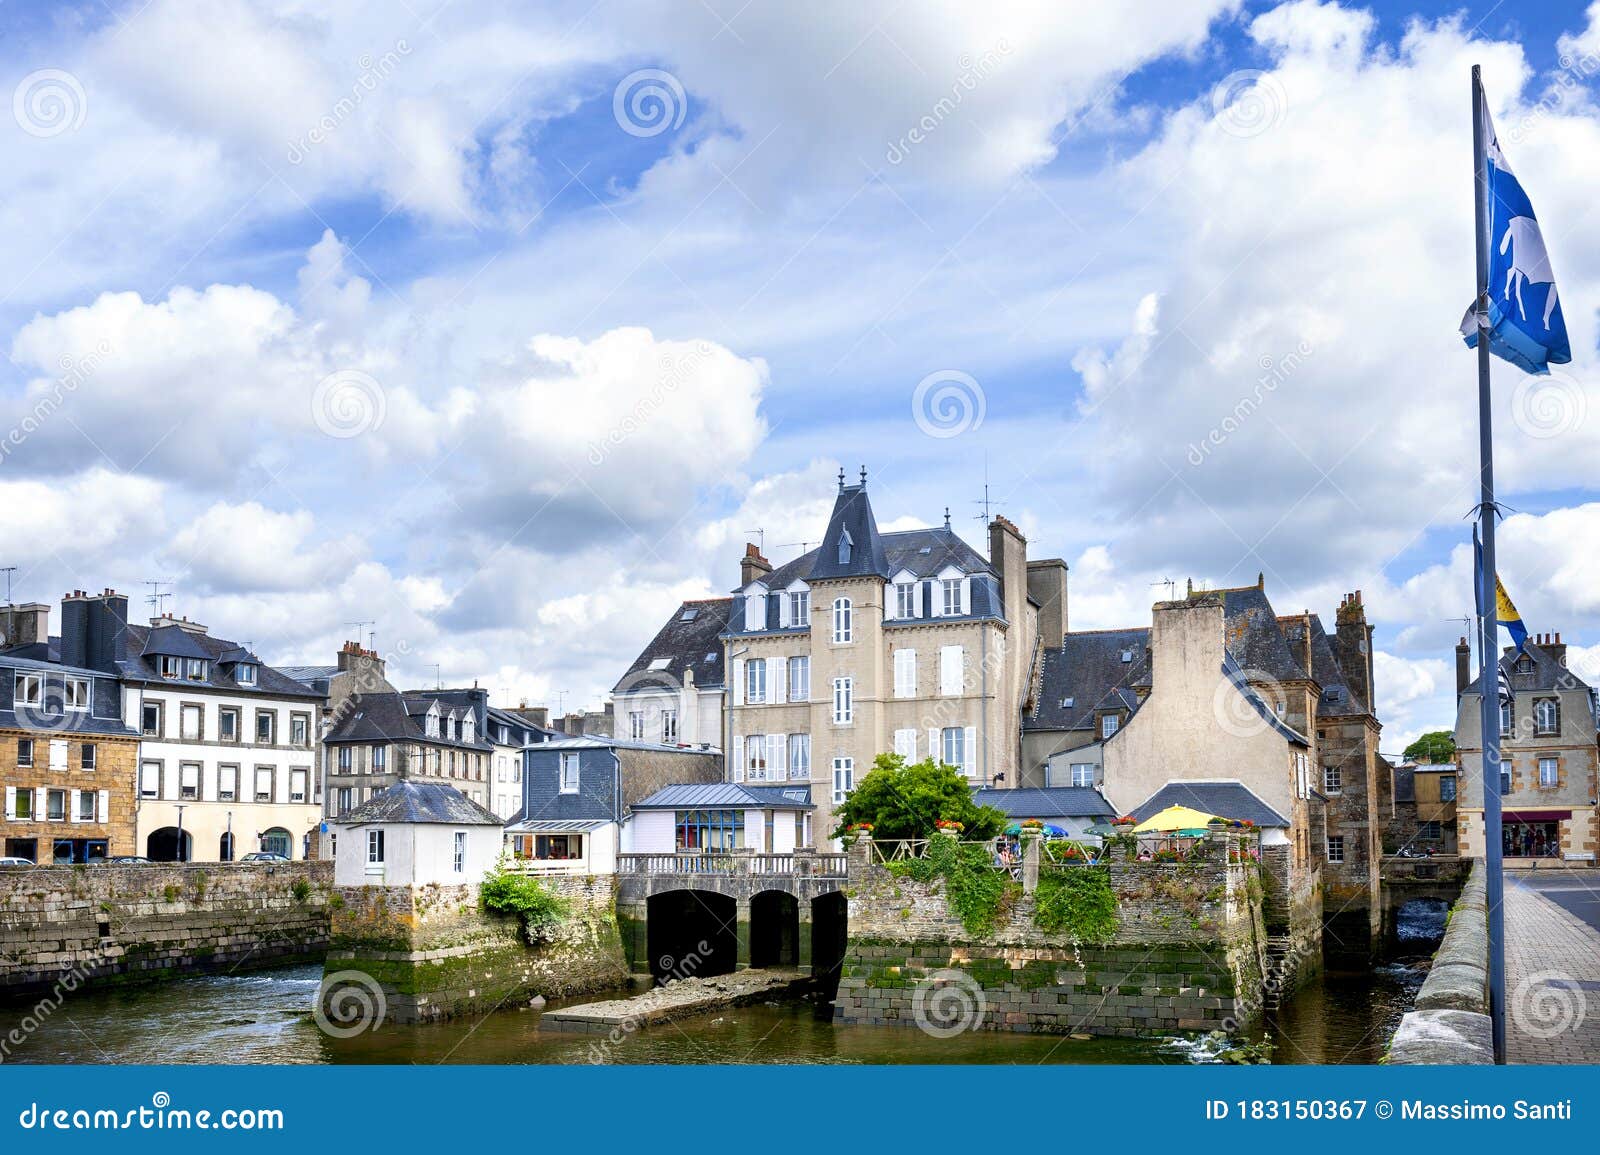 landerneau, the pont de rohan. a bridge with shops and houses built on it. brittany. france